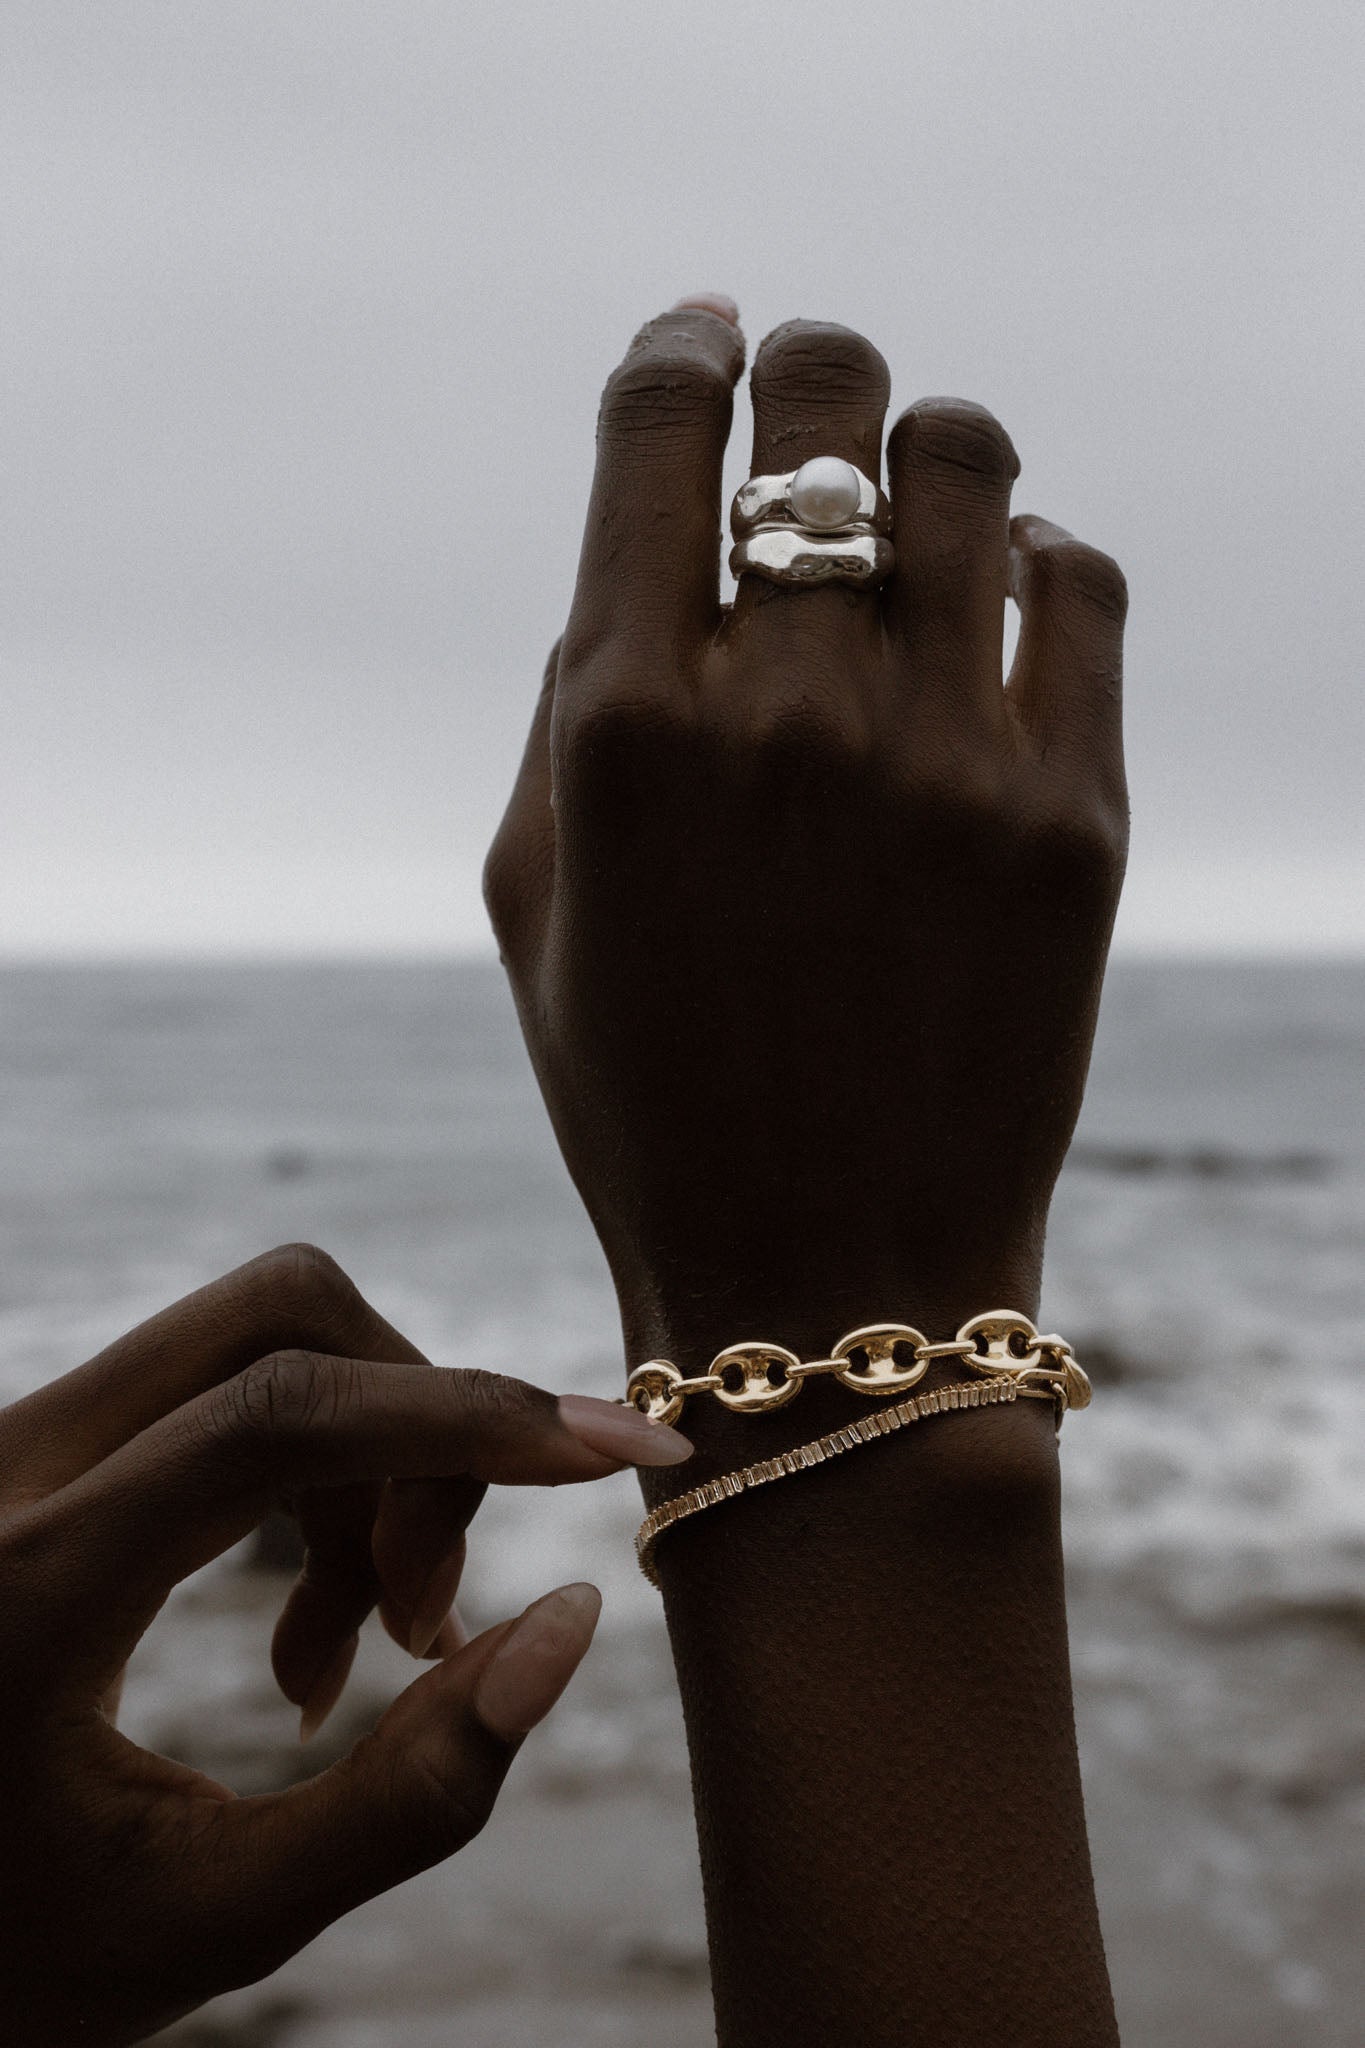 Puffed Mariner Chain Bracelet Gold